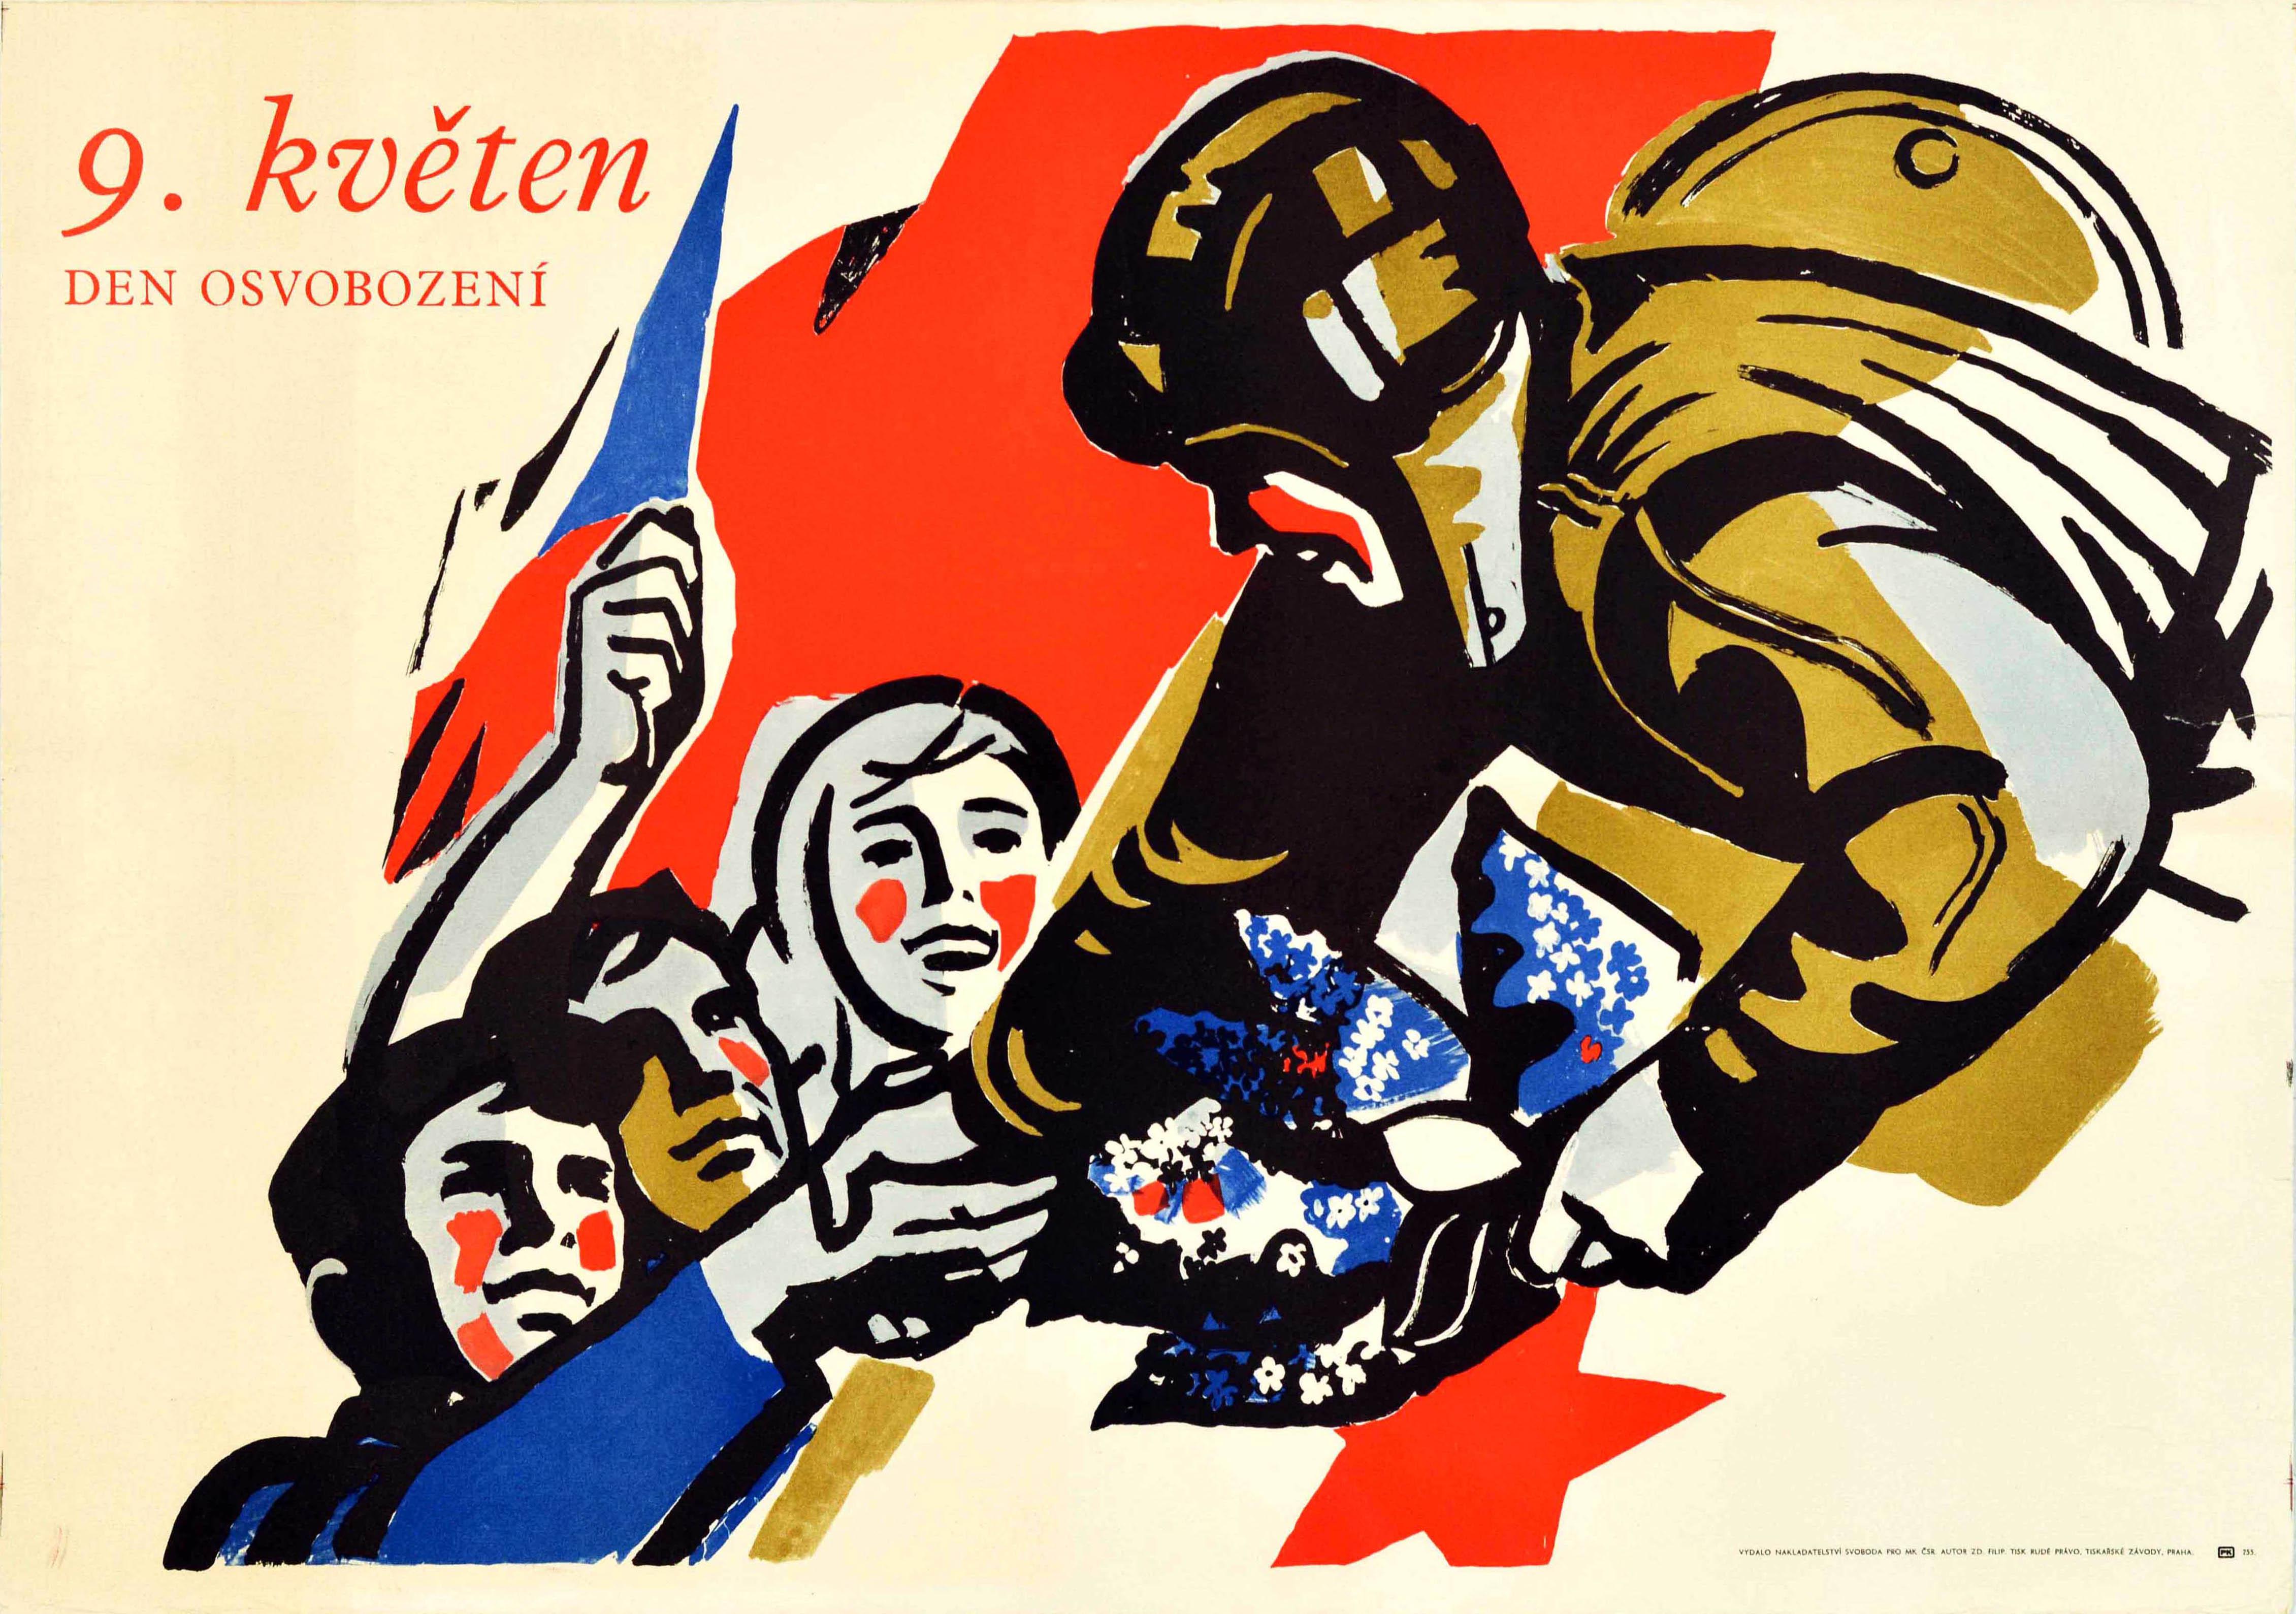 Unknown Print - Original Vintage Poster May 9 Den Osvobozeni Freedom Day End WWII Czechoslovakia